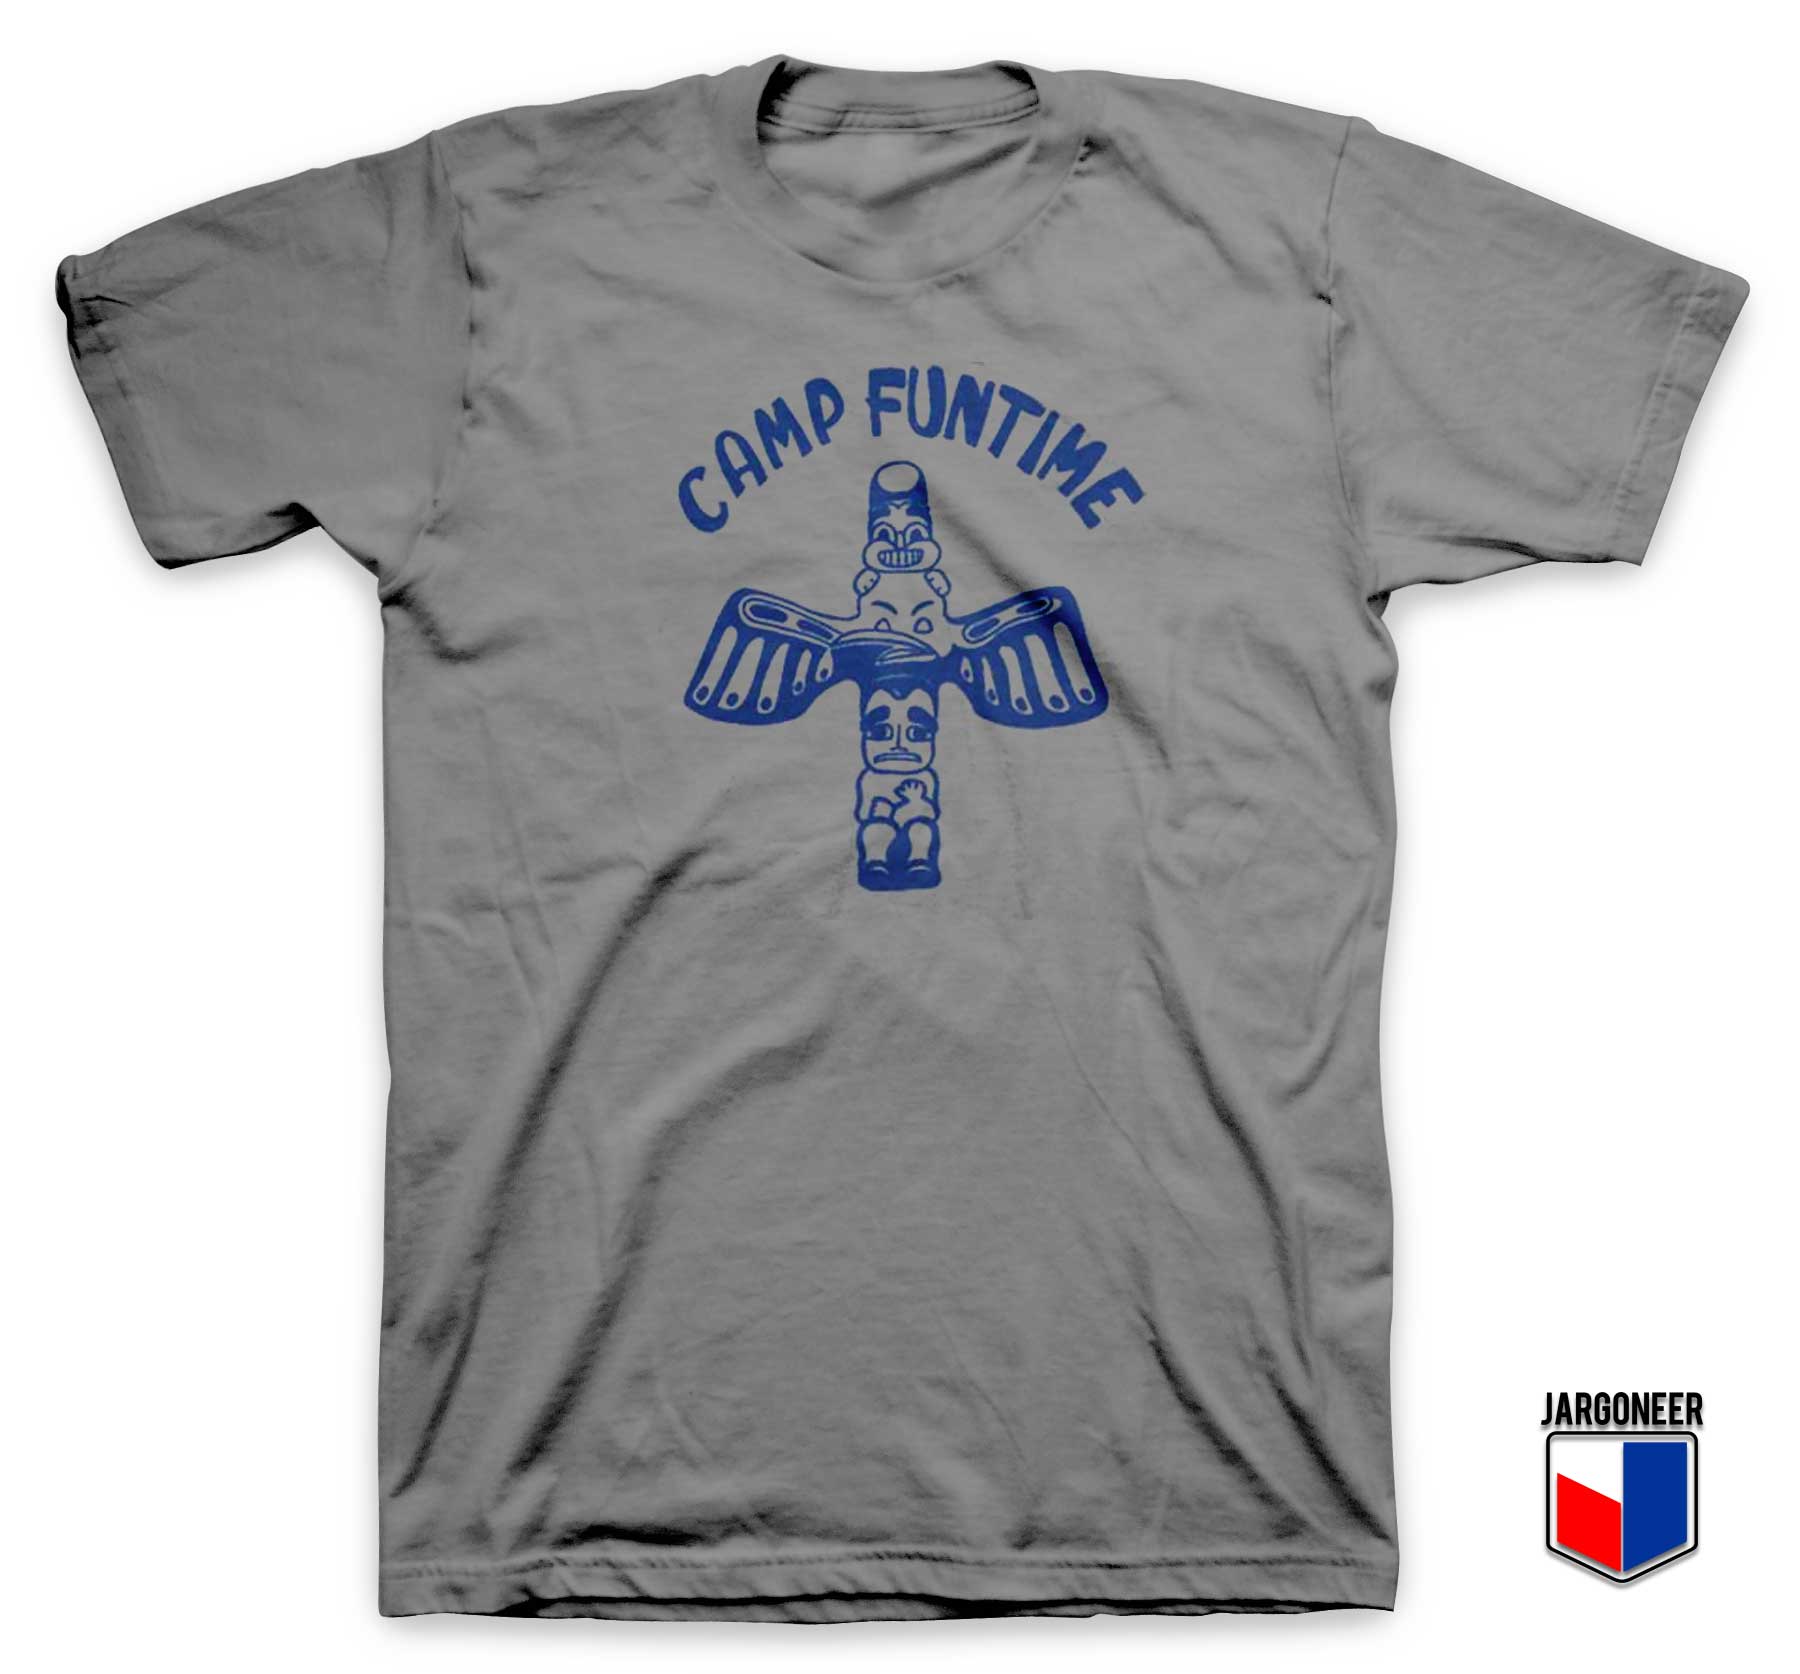 Camp Funtime T Shirt - Custom Design By jargoneer.com